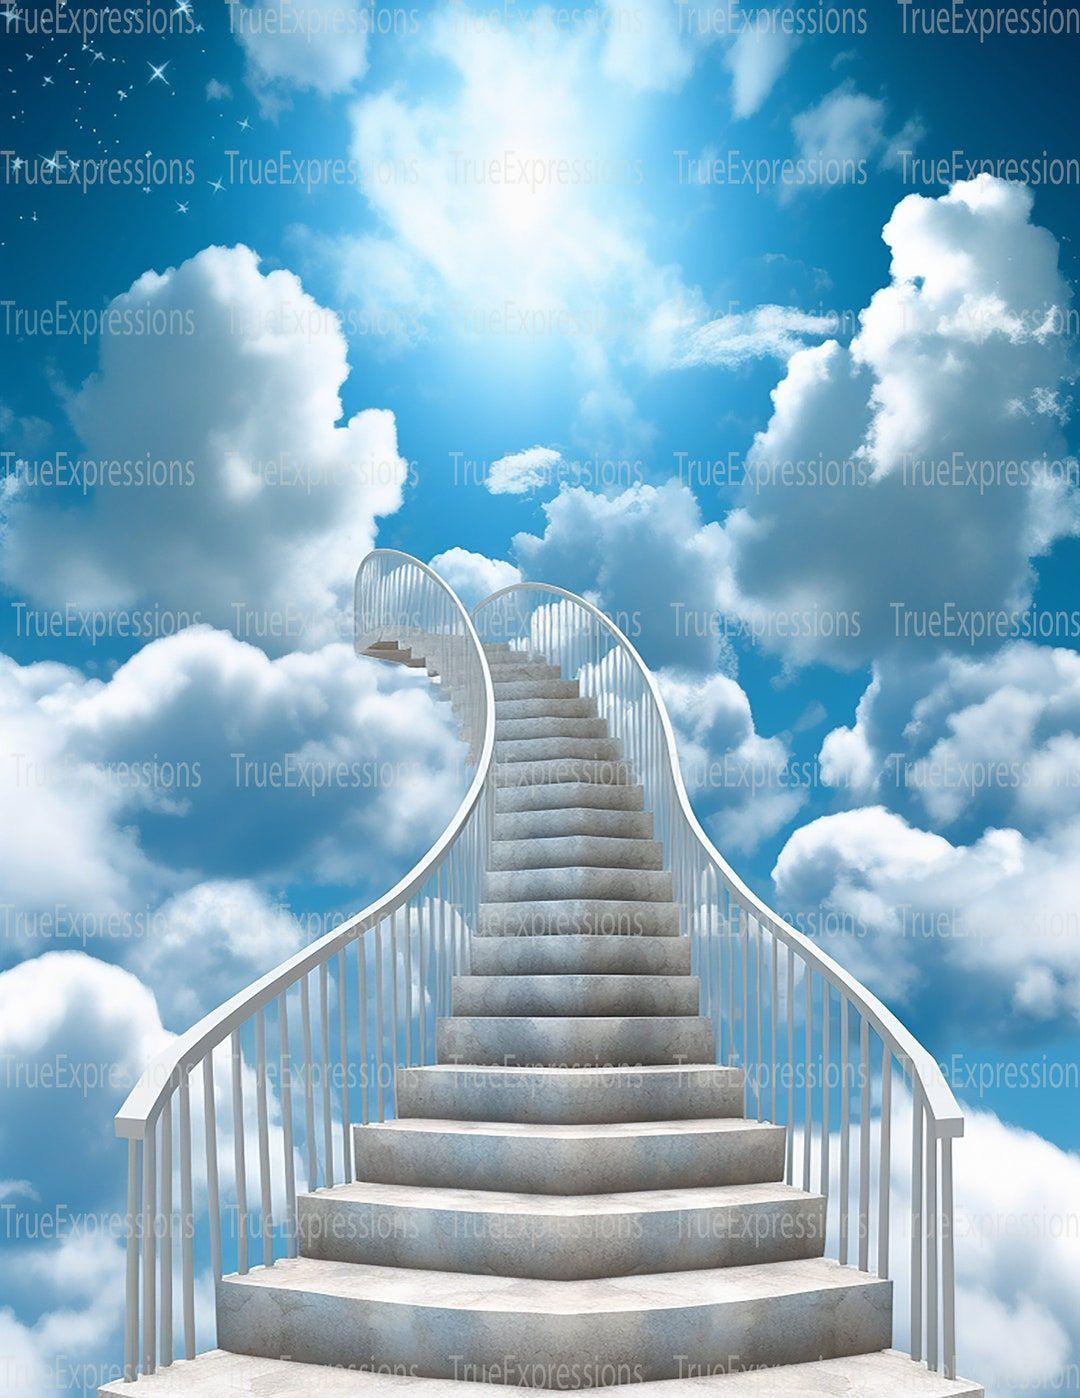 Stairway to Heaven by vandemoniumx on DeviantArt